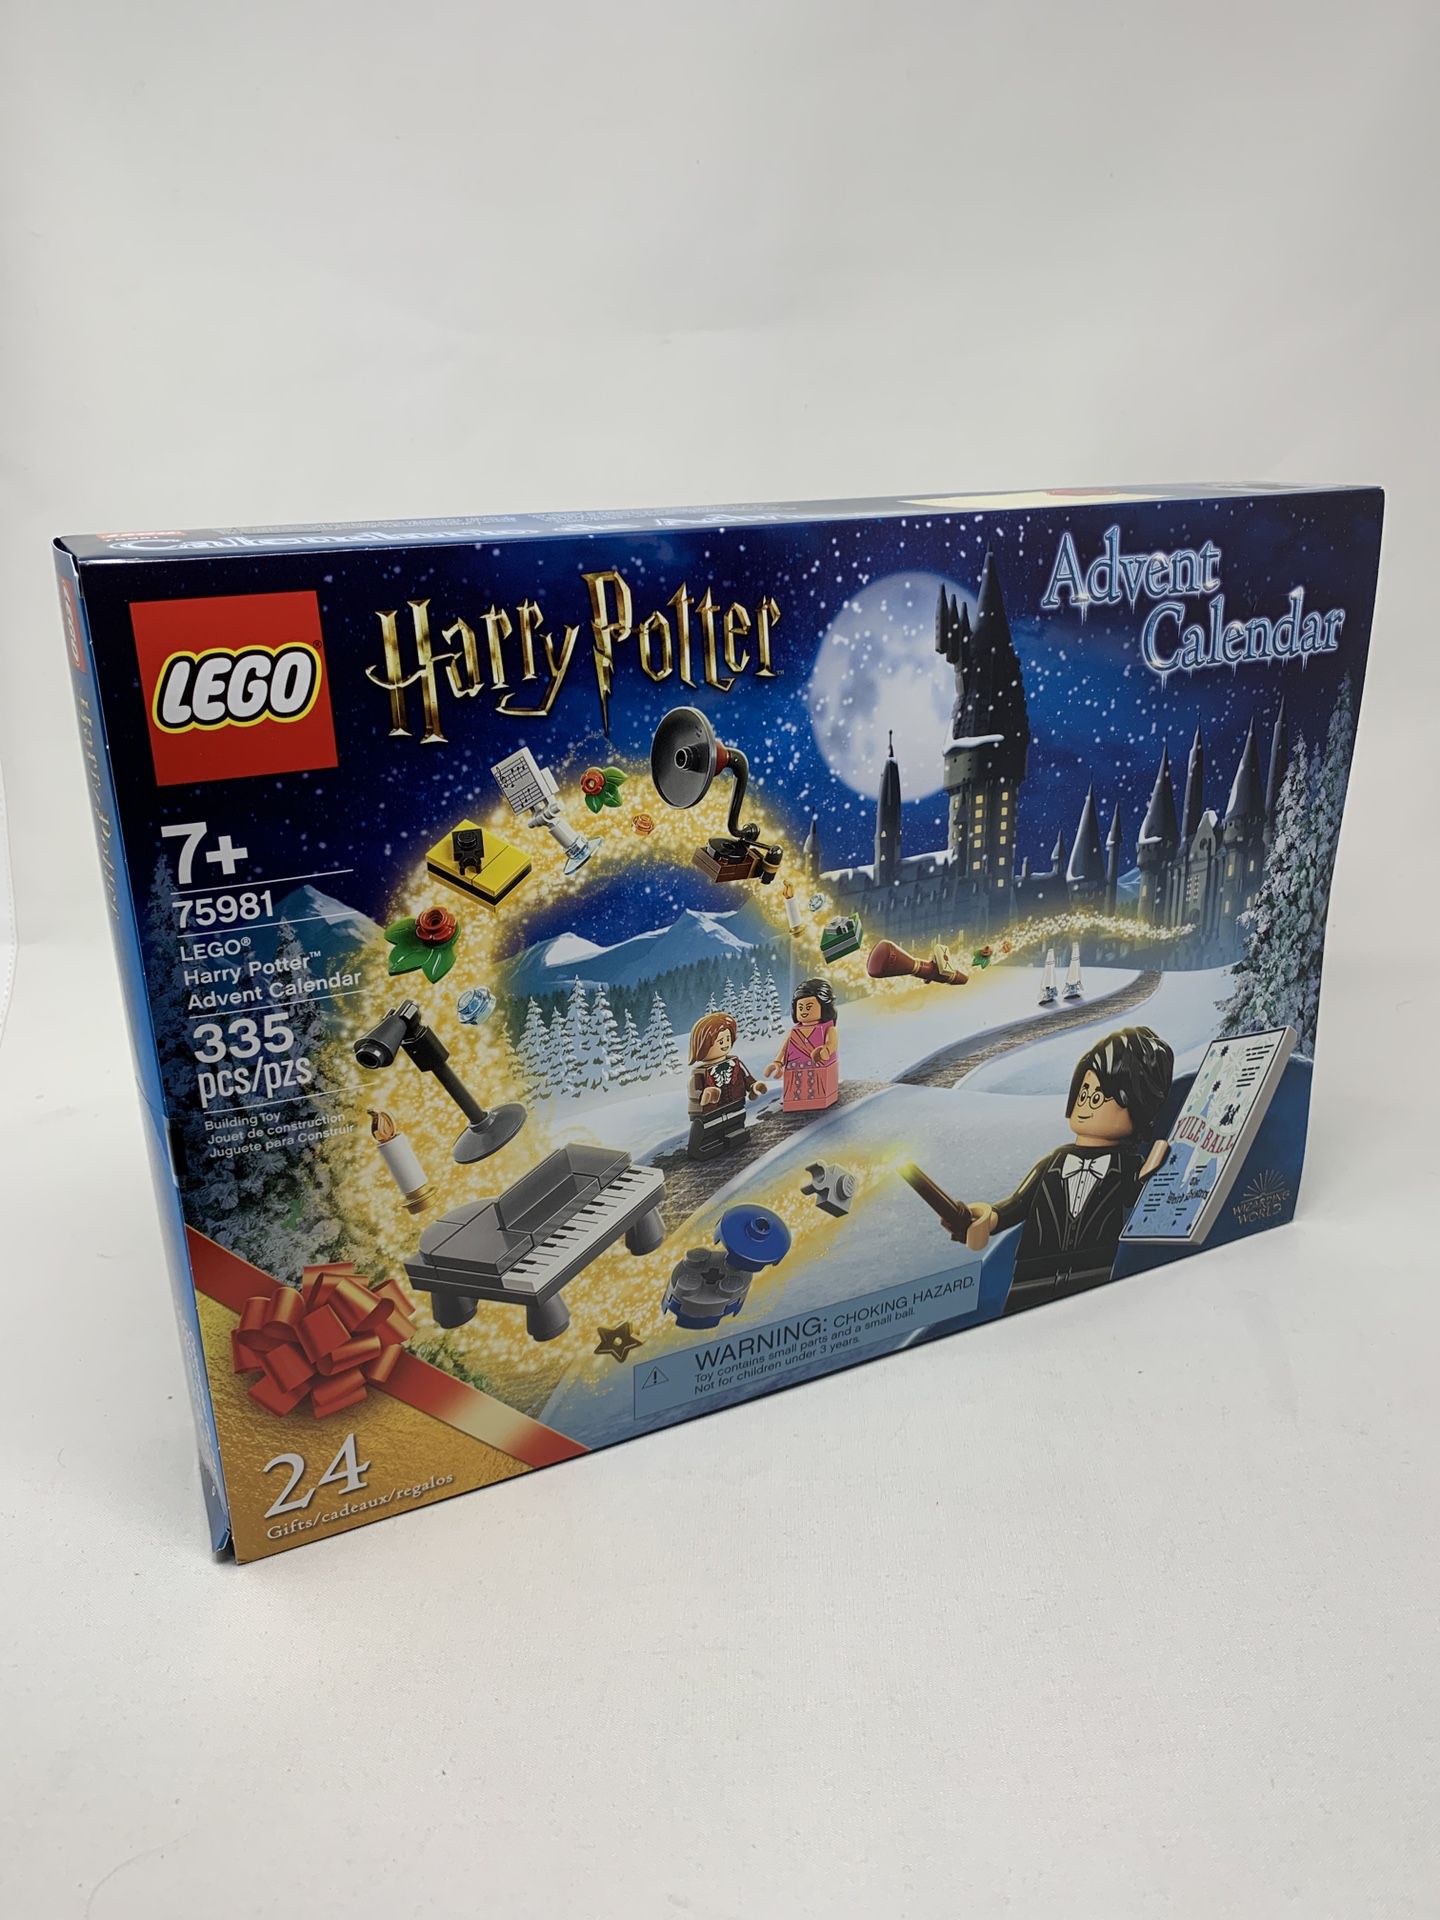 Lego Harry Potter advent calendar 75981